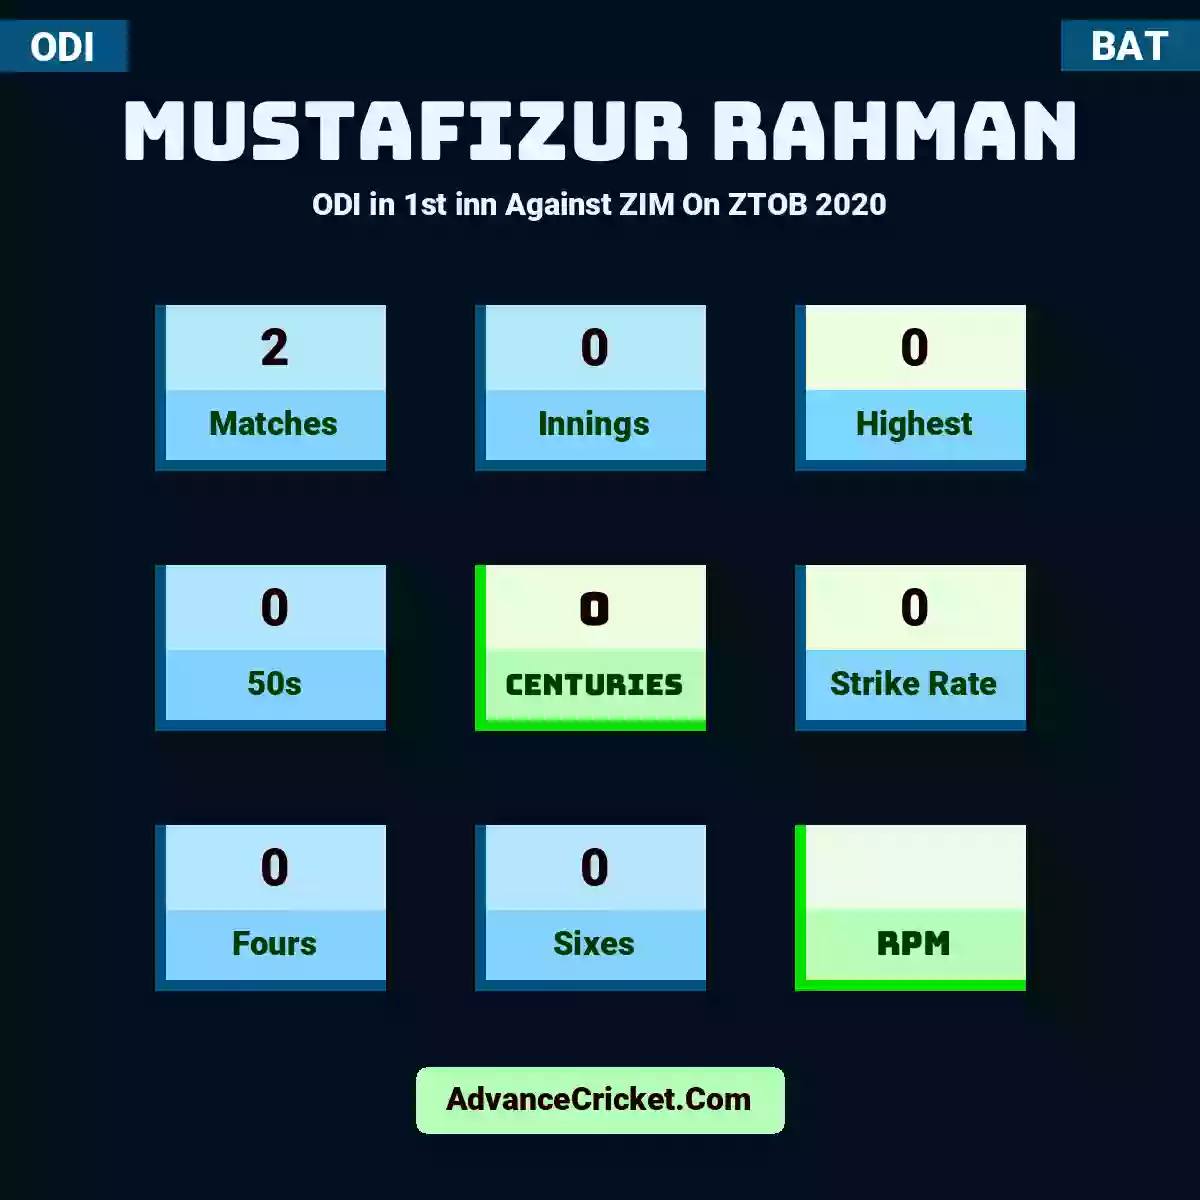 Mustafizur Rahman ODI  in 1st inn Against ZIM On ZTOB 2020, Mustafizur Rahman played 2 matches, scored 0 runs as highest, 0 half-centuries, and 0 centuries, with a strike rate of 0. M.Rahman hit 0 fours and 0 sixes.